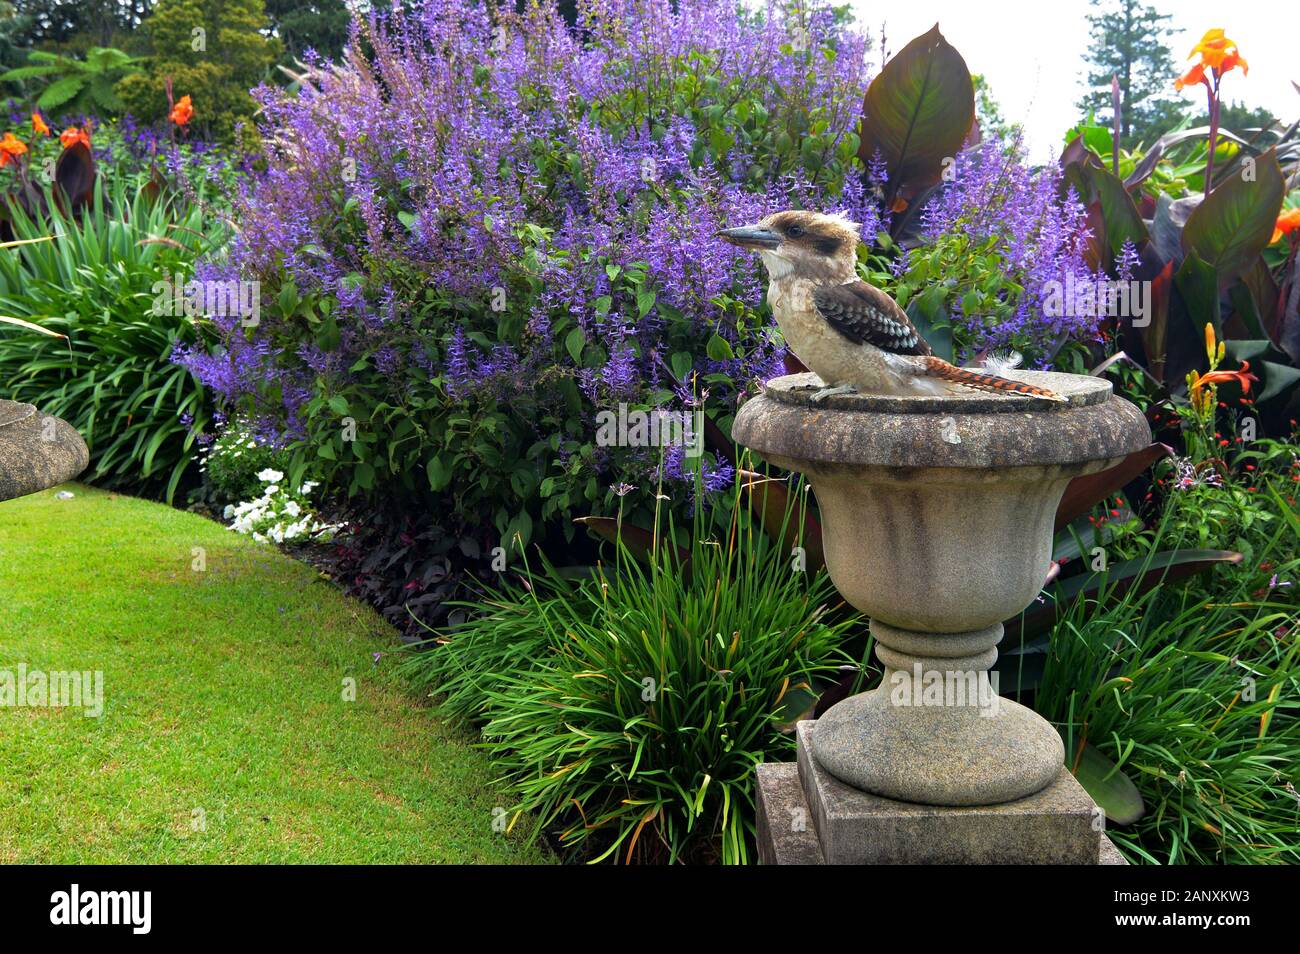 Laughing kookaburra, scientific name Dacelo novaeguineae, sitting like a statue in a flower garden Stock Photo